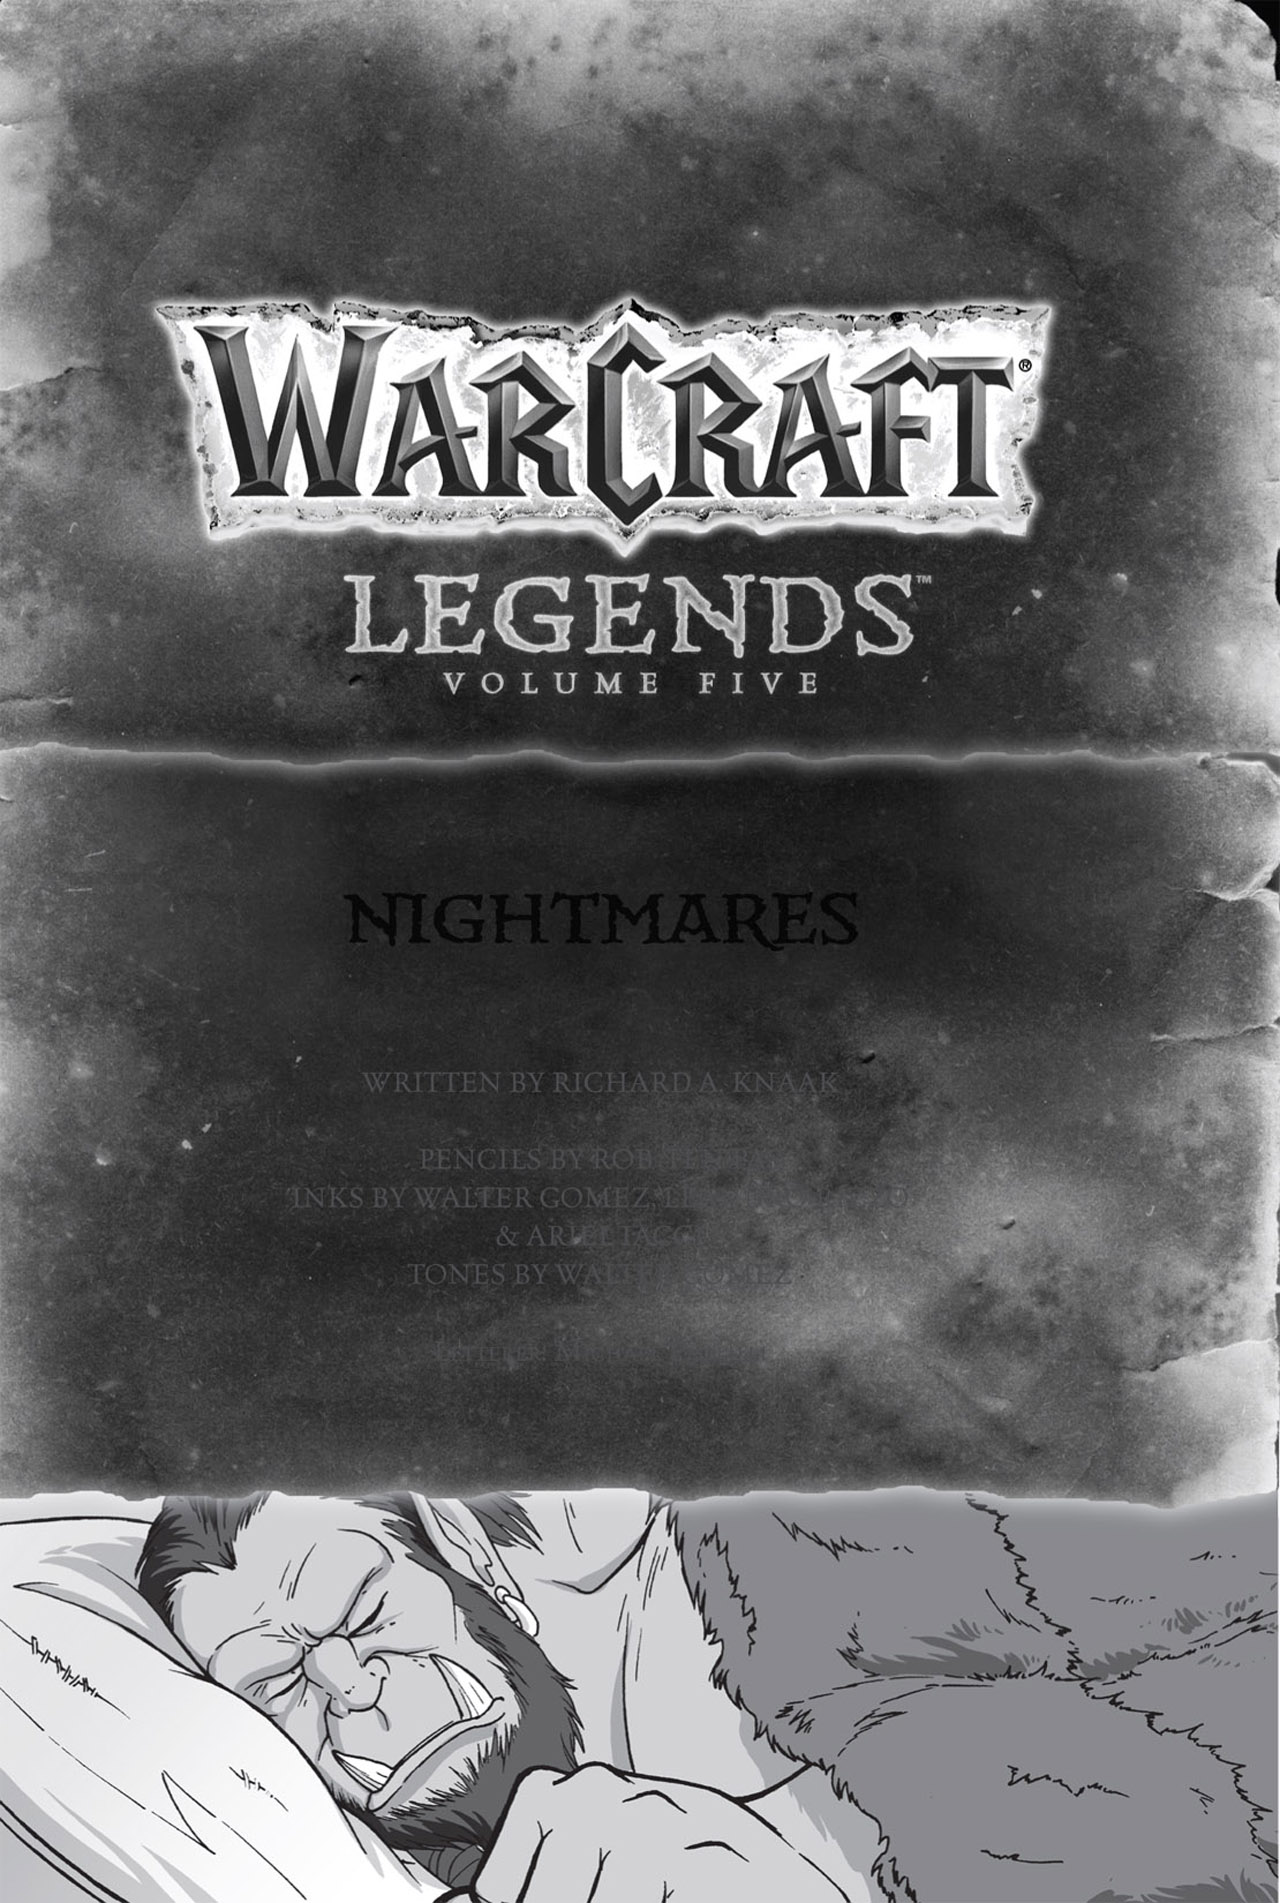 Read online Warcraft: Legends comic -  Issue # Vol. 5 - 161